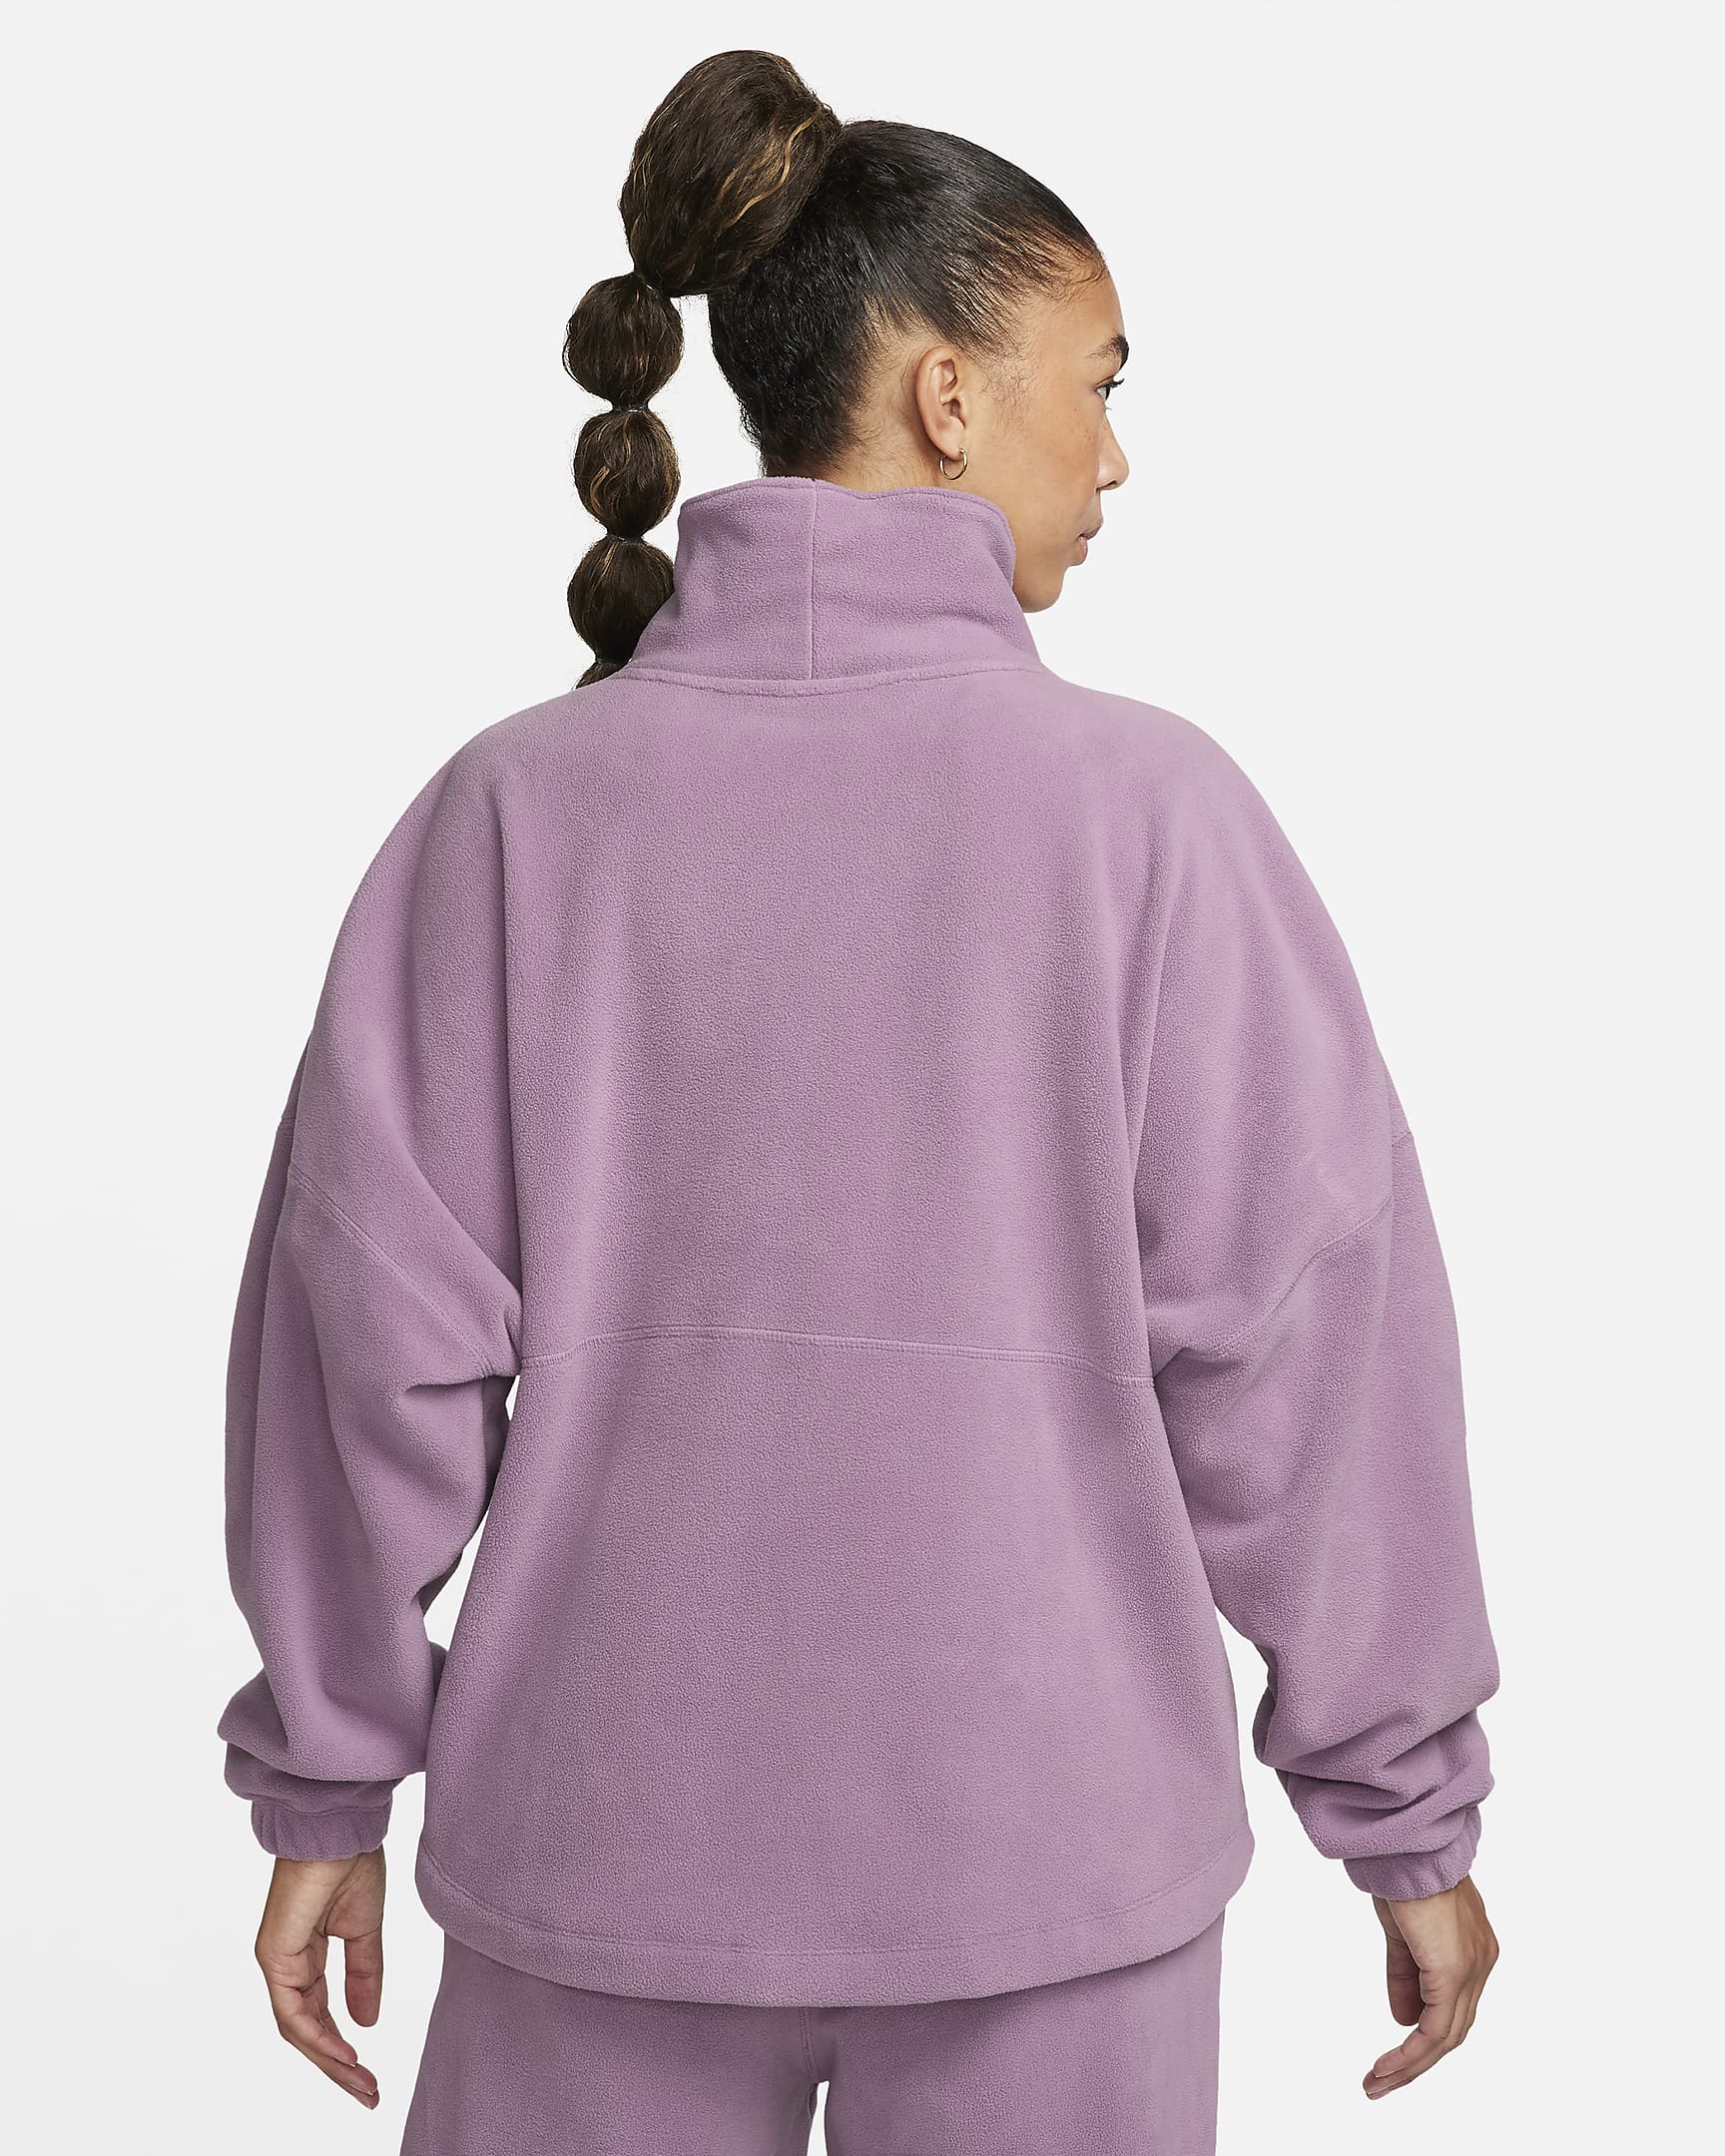 Nike Therma-FIT One Women's Oversized Long-Sleeve Fleece Top. Nike LU